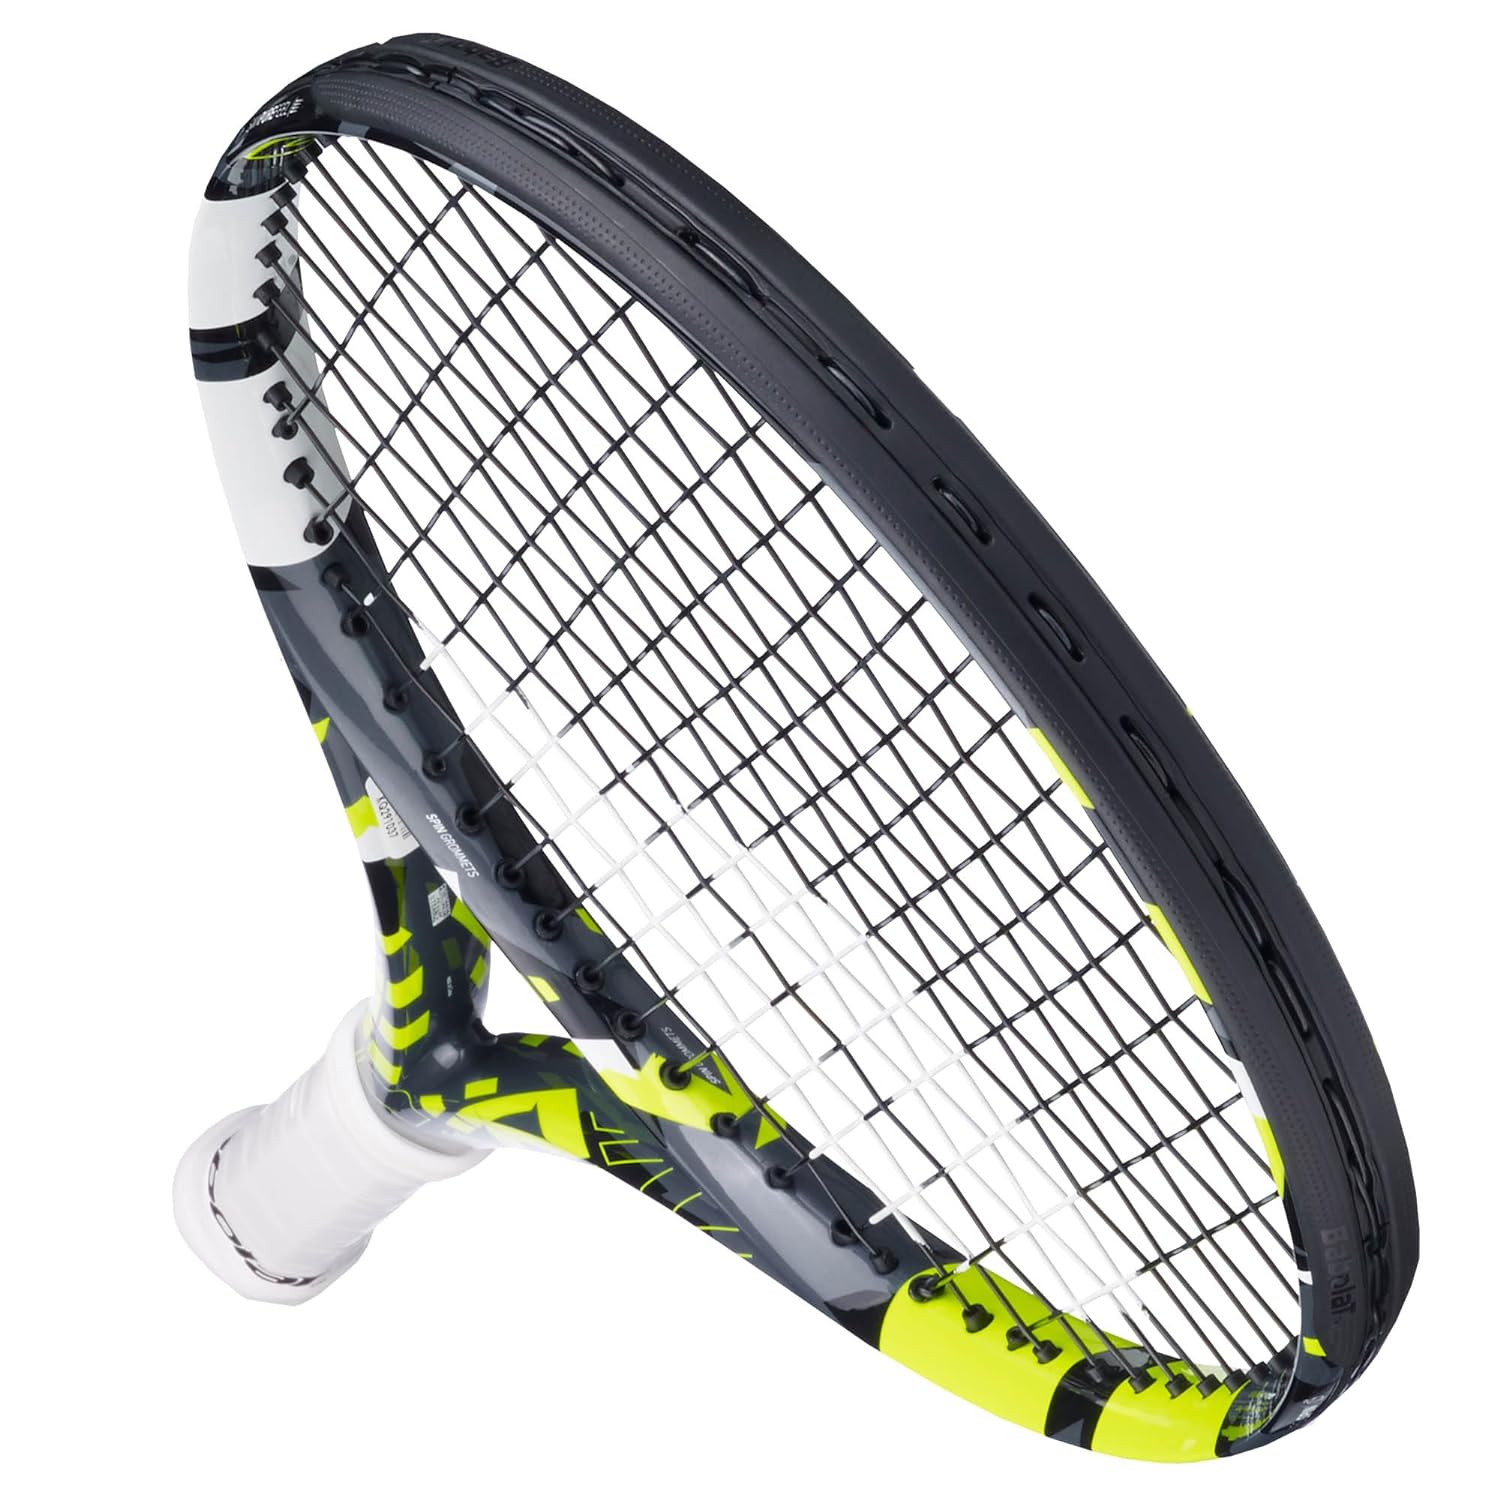 Babolat 140465 Pure Aero Junior 26 S CV Strung Tennis Racquet - Best Price online Prokicksports.com